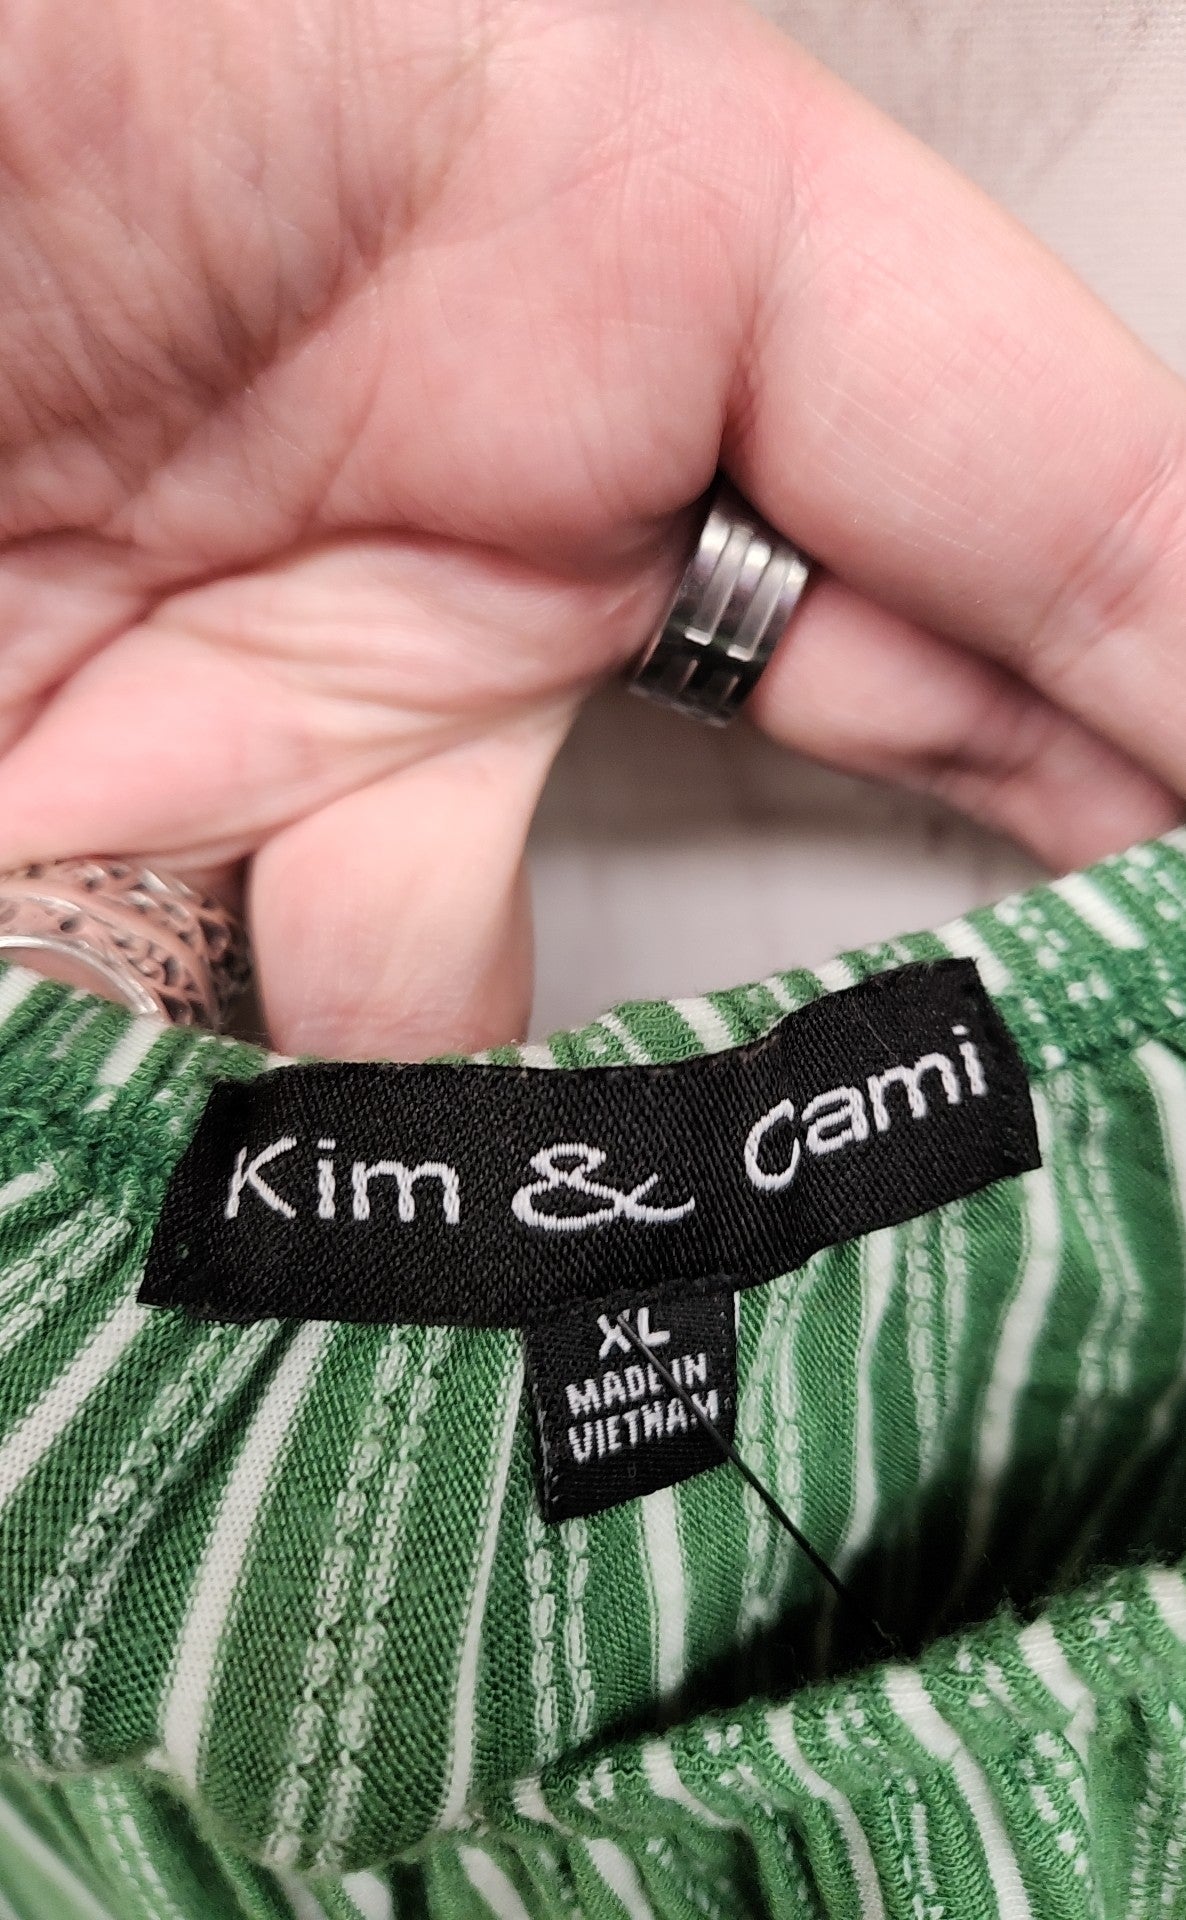 Kim & cami Women's Size XL Green Short Sleeve Top